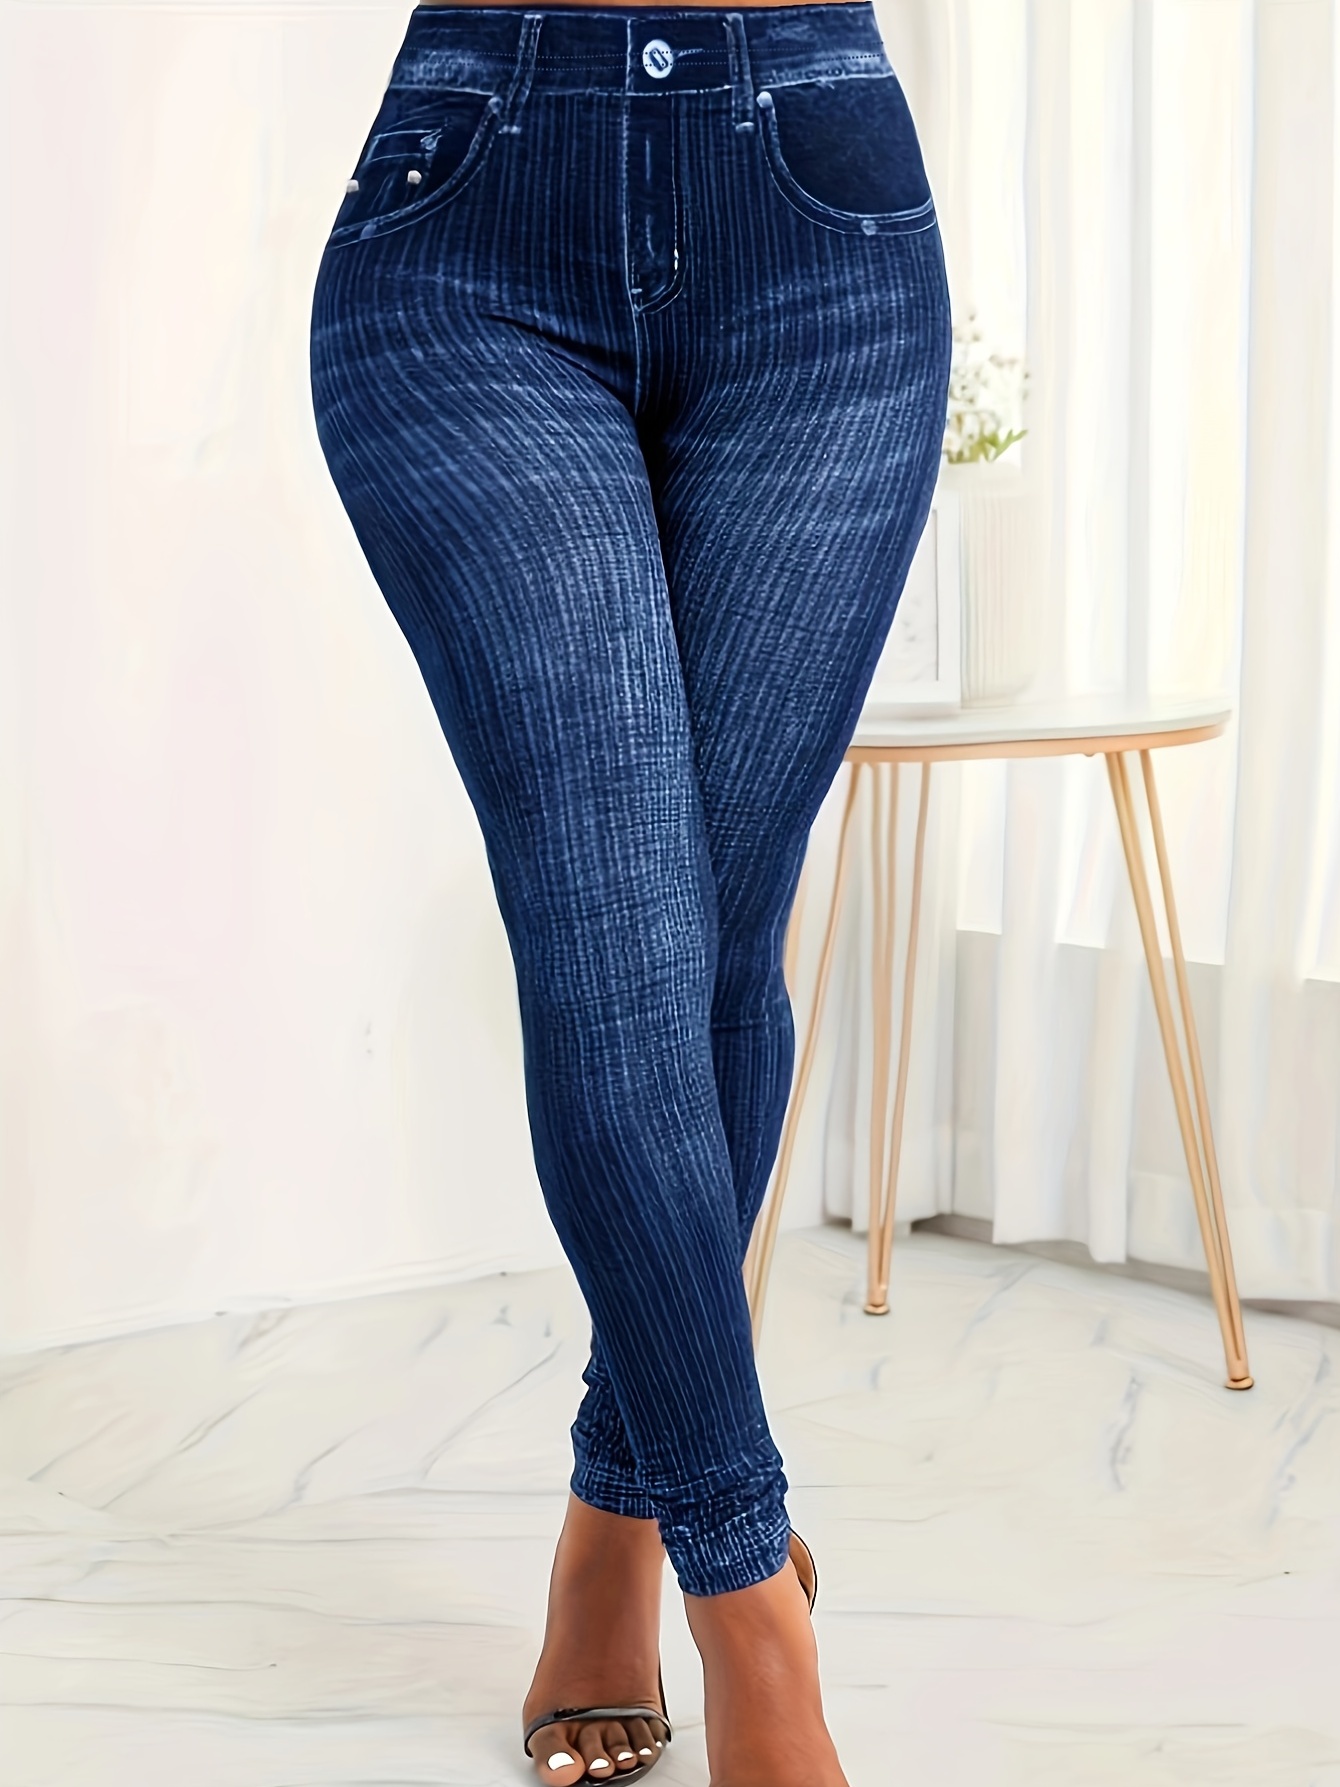 Women Skinny Leggings Denim Look Jeans Jeggings Stretch High Waist